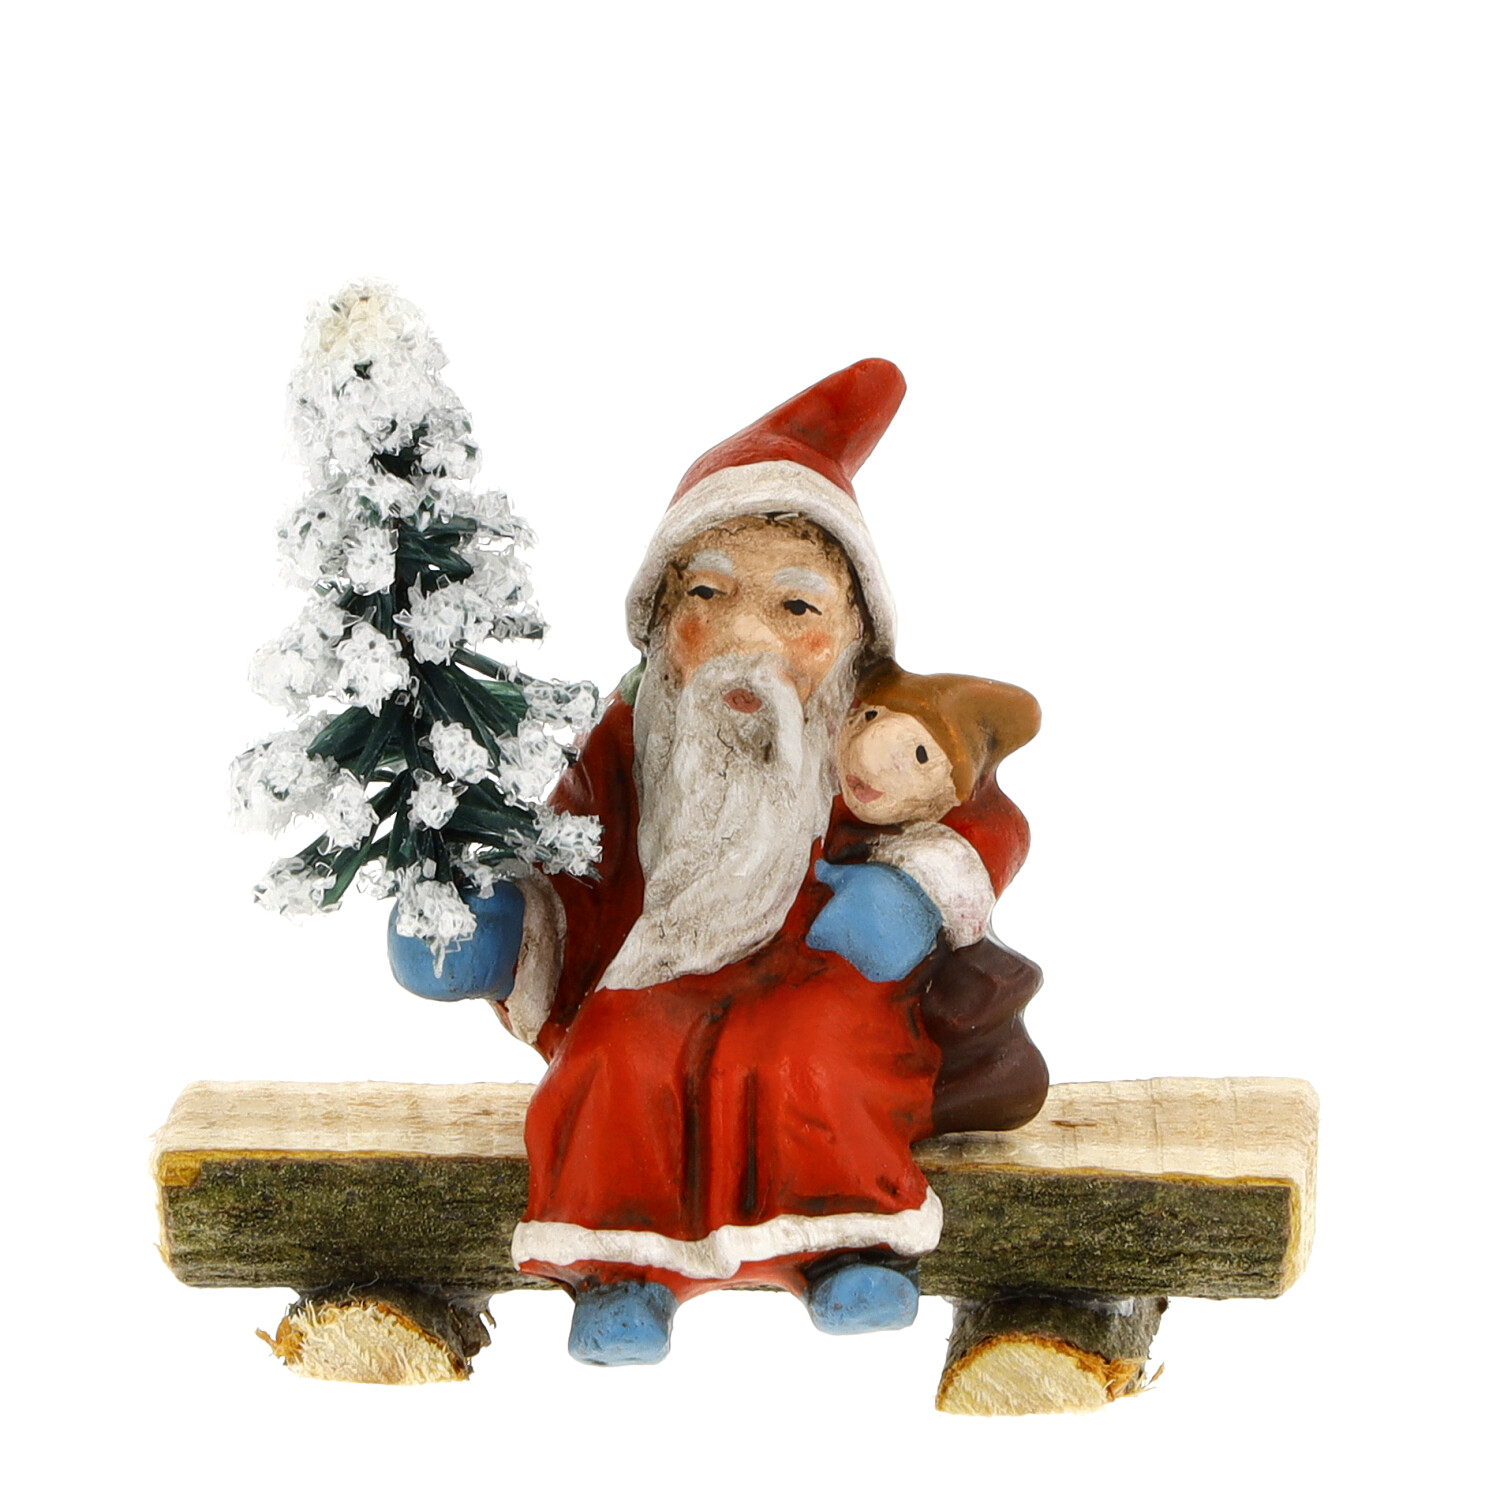 Miniature Santa on bench - Marolin - made in Germany